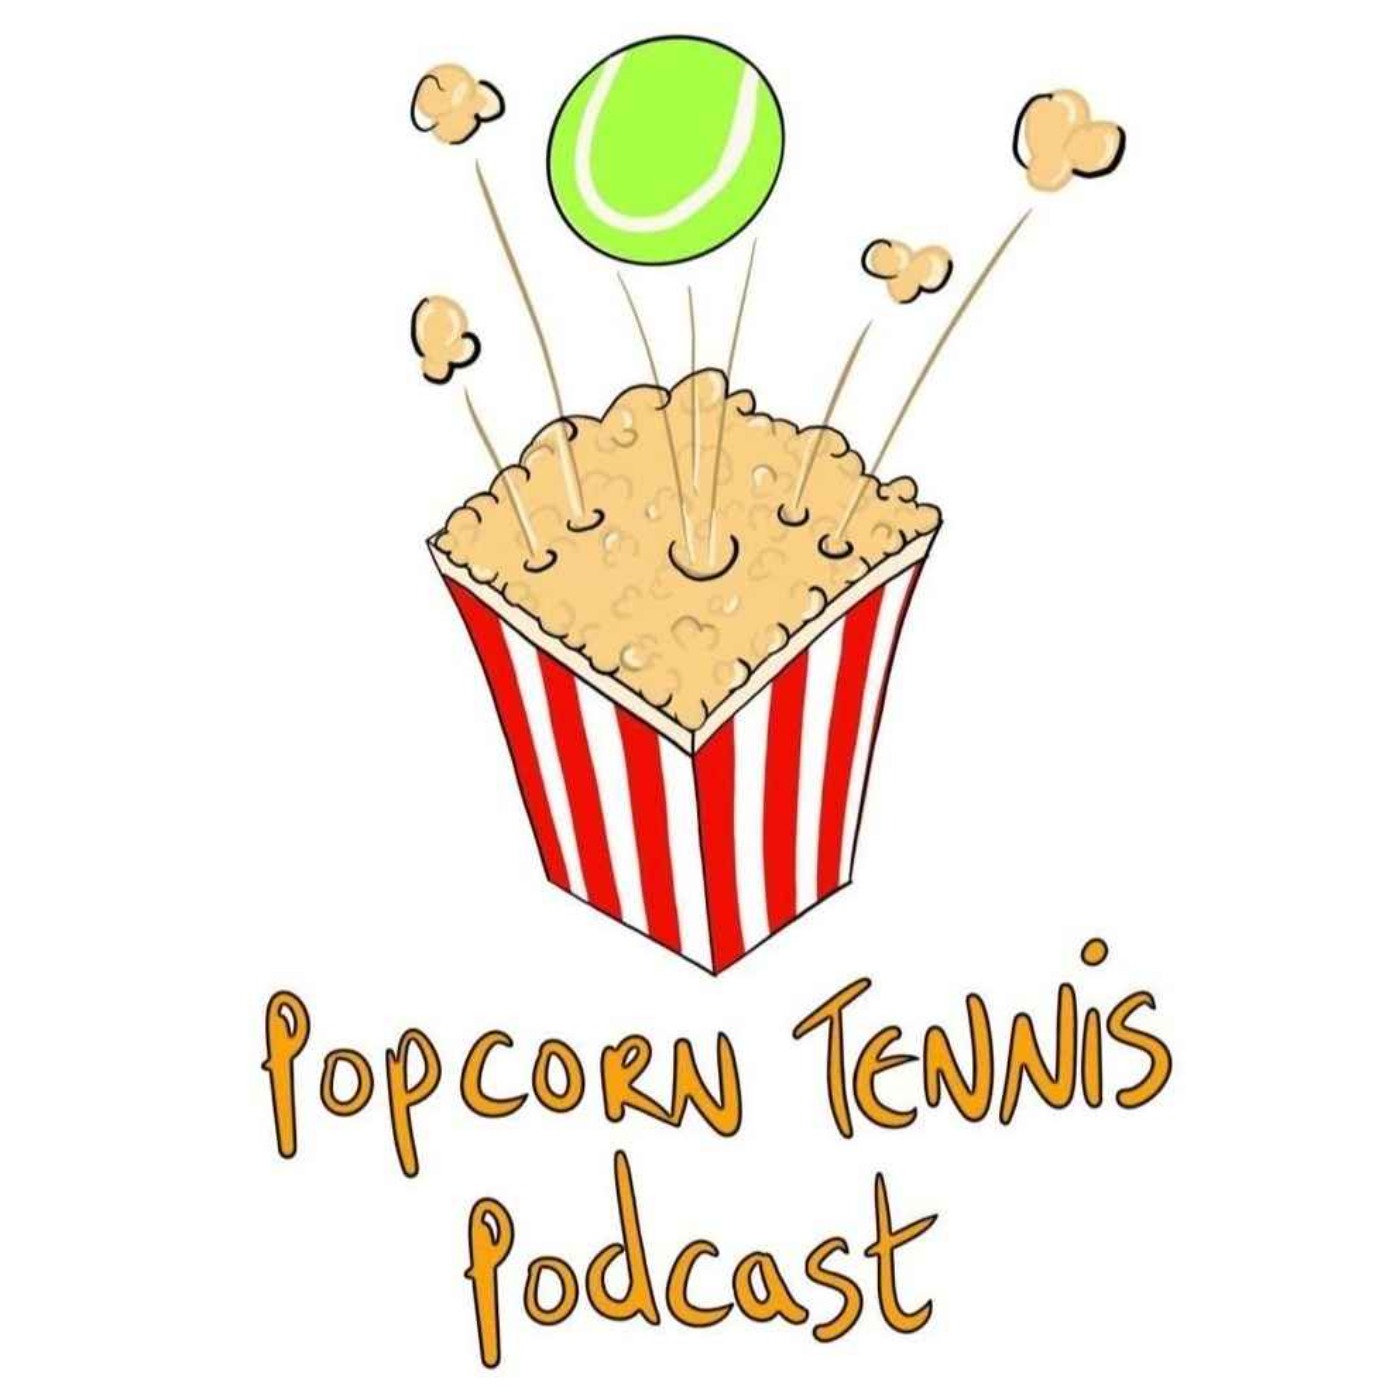 Popcorn Tennis Podcast